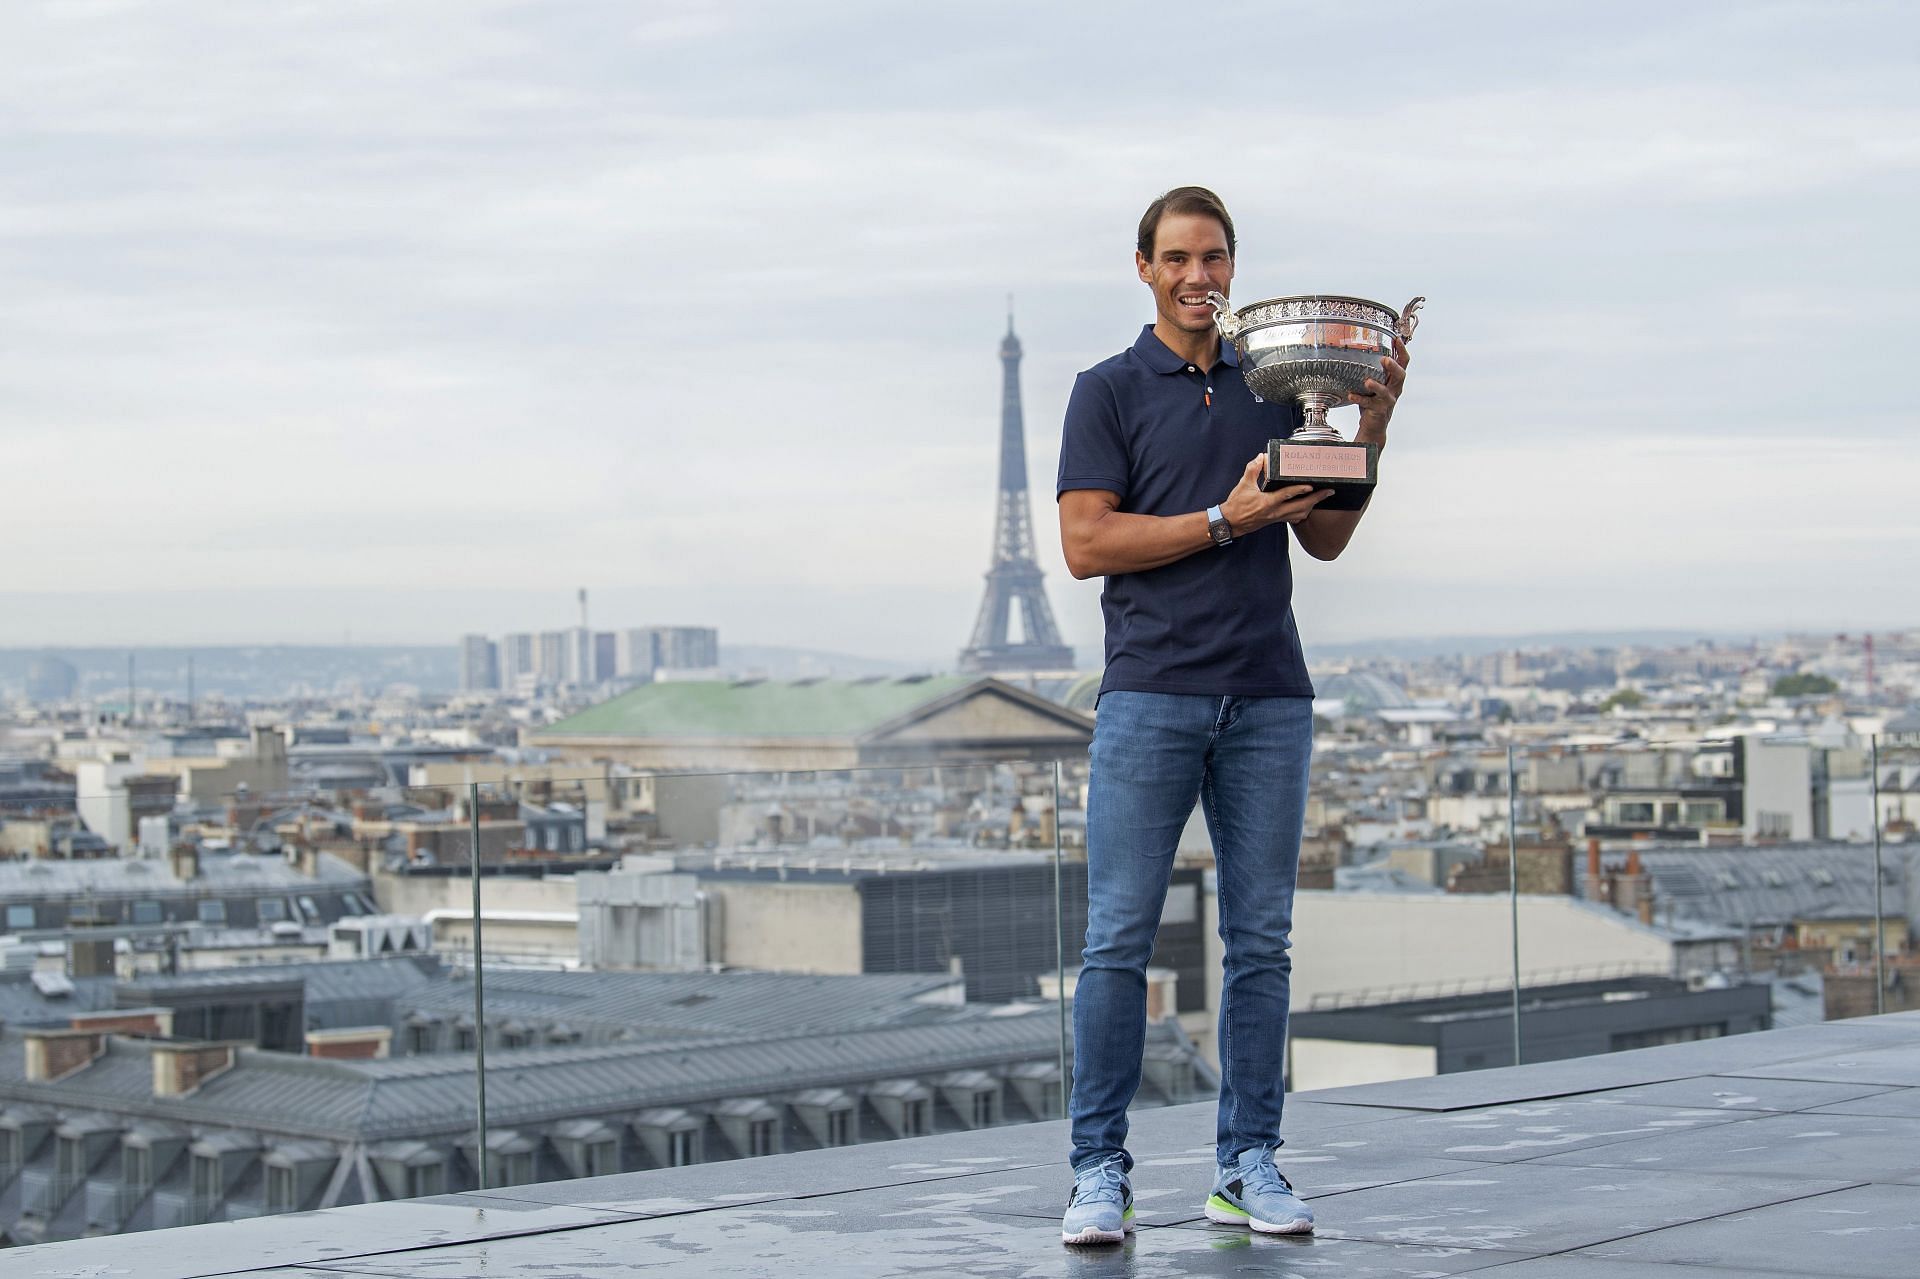 Rafael Nadal won his 13th Roland Garros title in 2020.